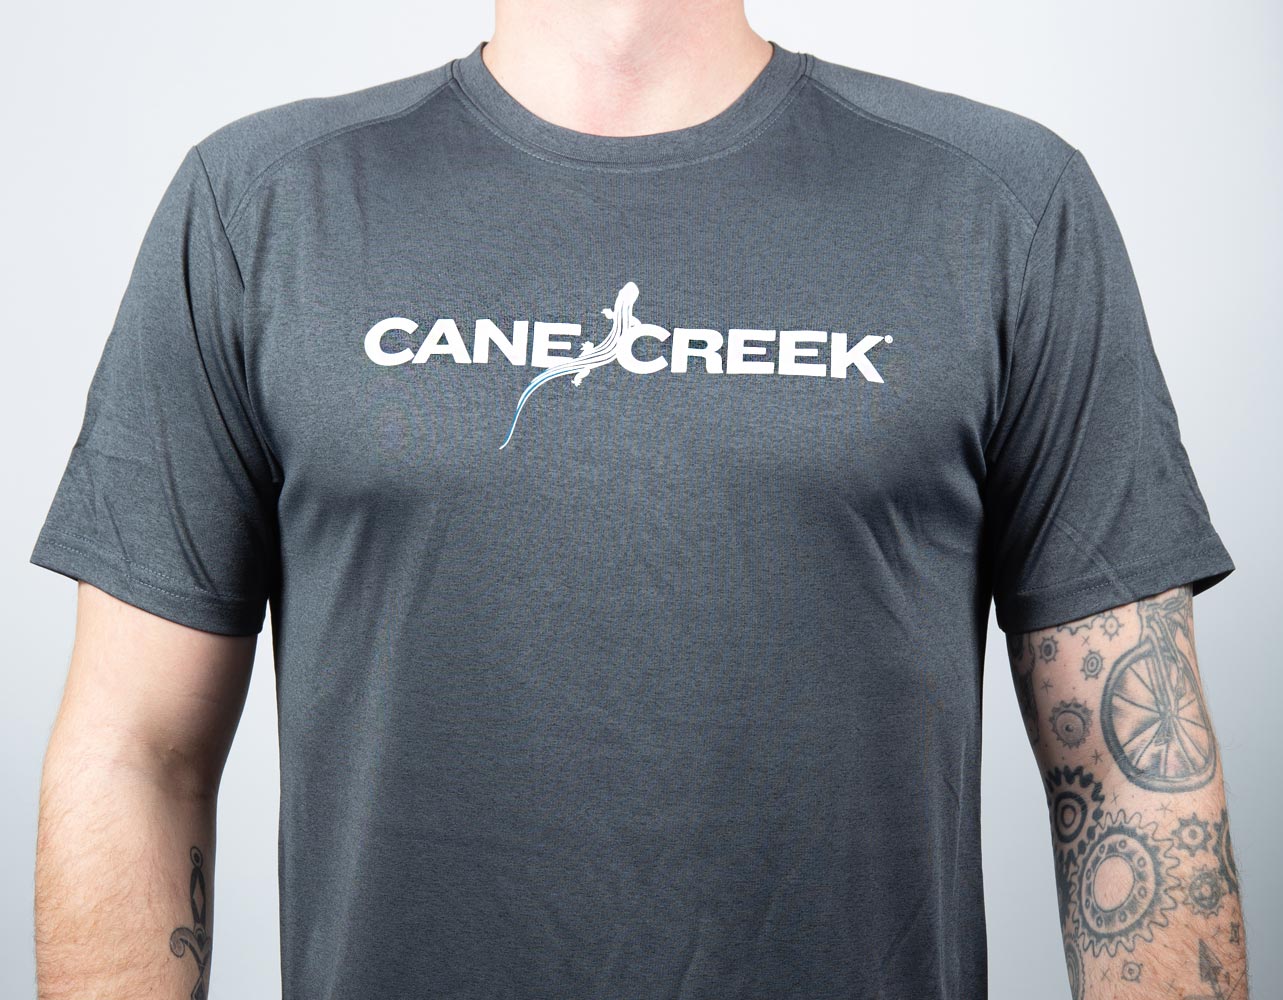 Cane Creek Ride Tee Product Image